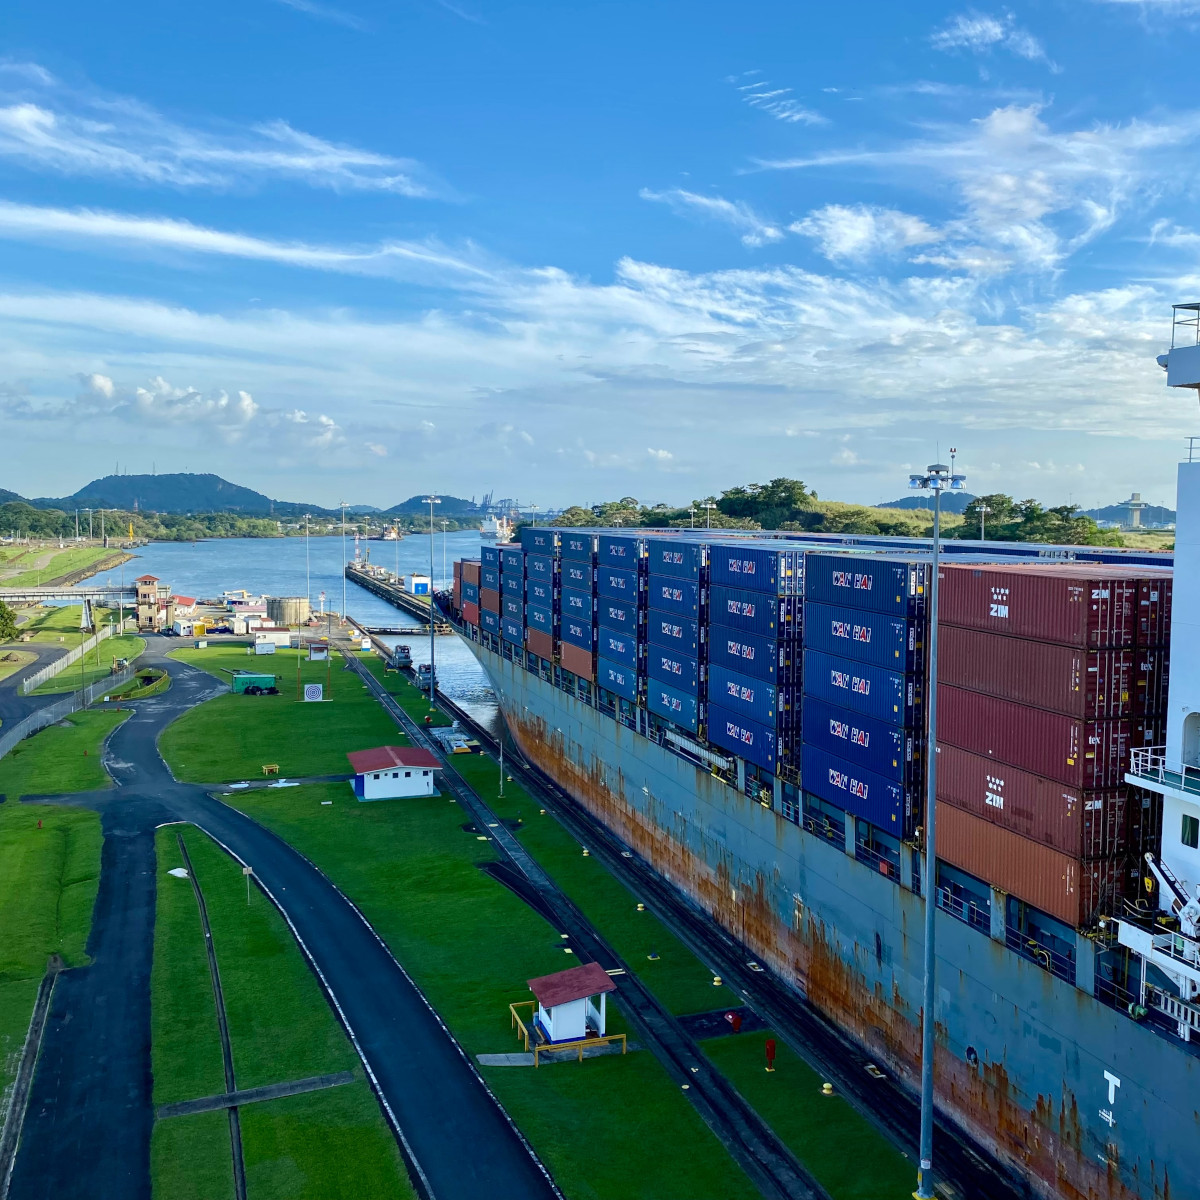  Transit on the Panama Canal